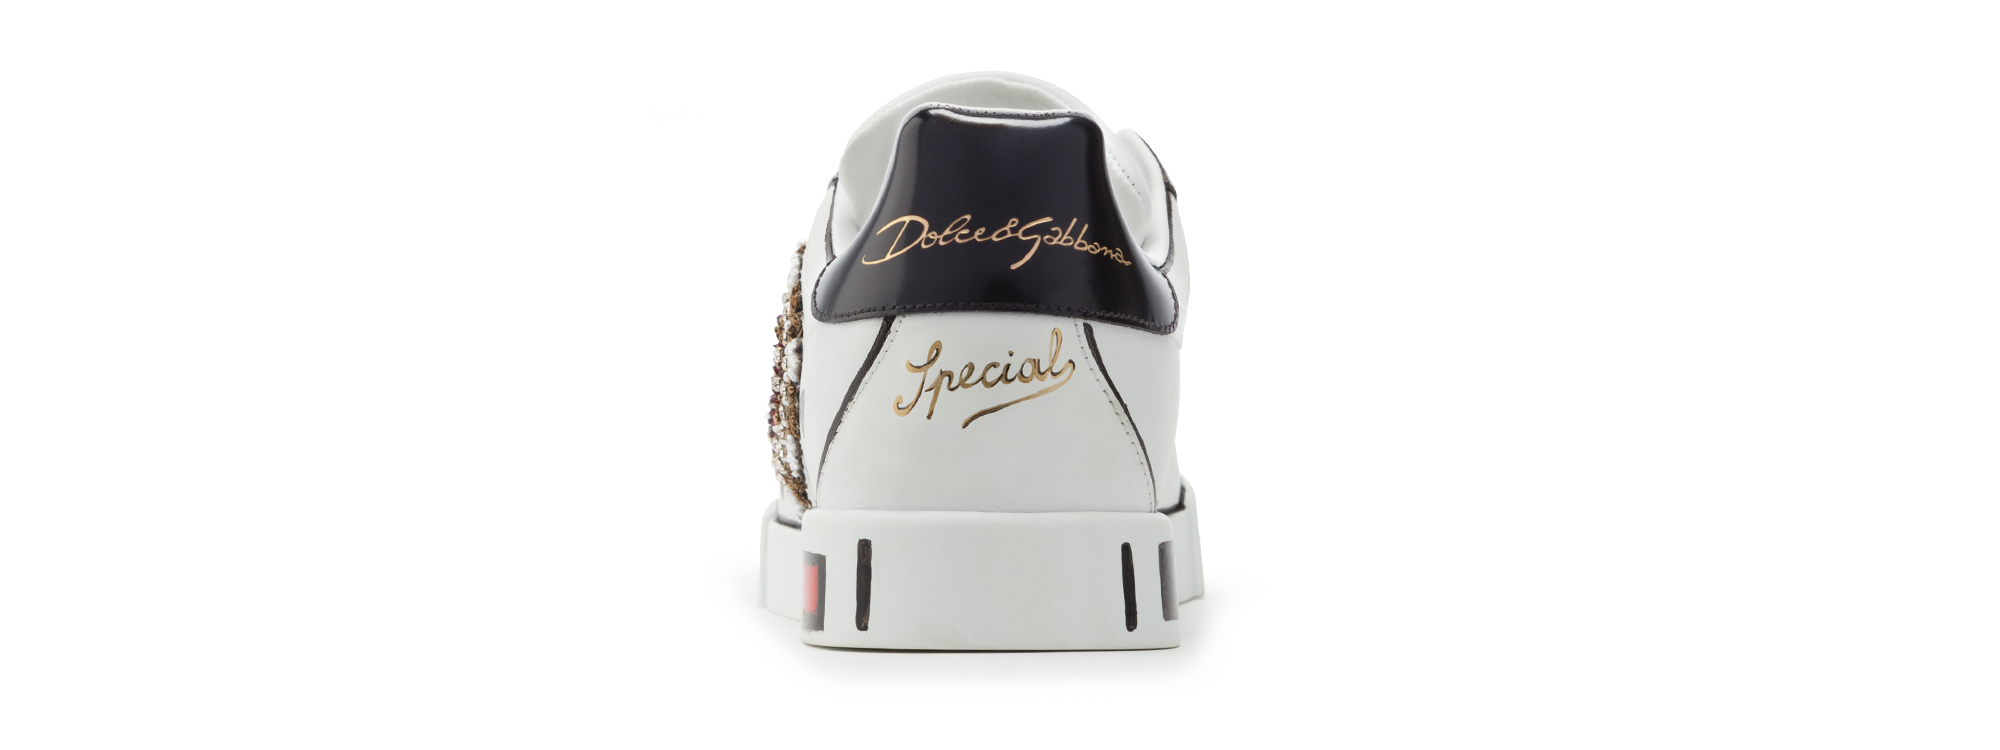 Dolce & Gabbana Sneaker Portofino Limited edition WEISS CK1563B5845